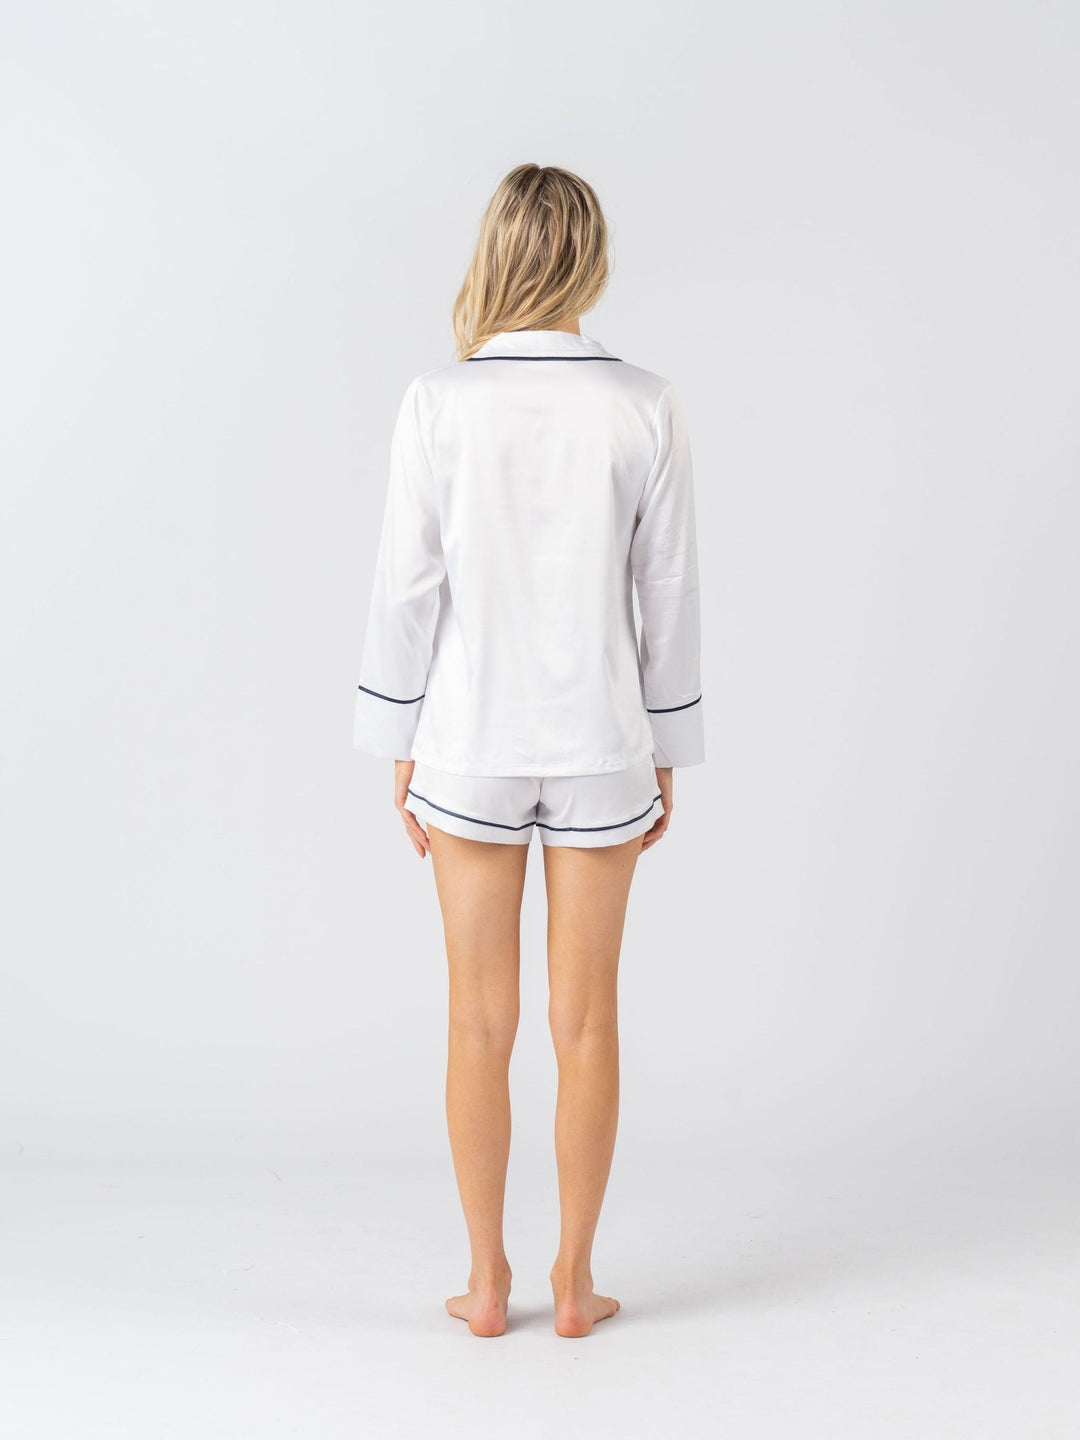 Satin Personalised Pyjama Set - Long Sleeve White/Navy (Faulty/Final Sale)